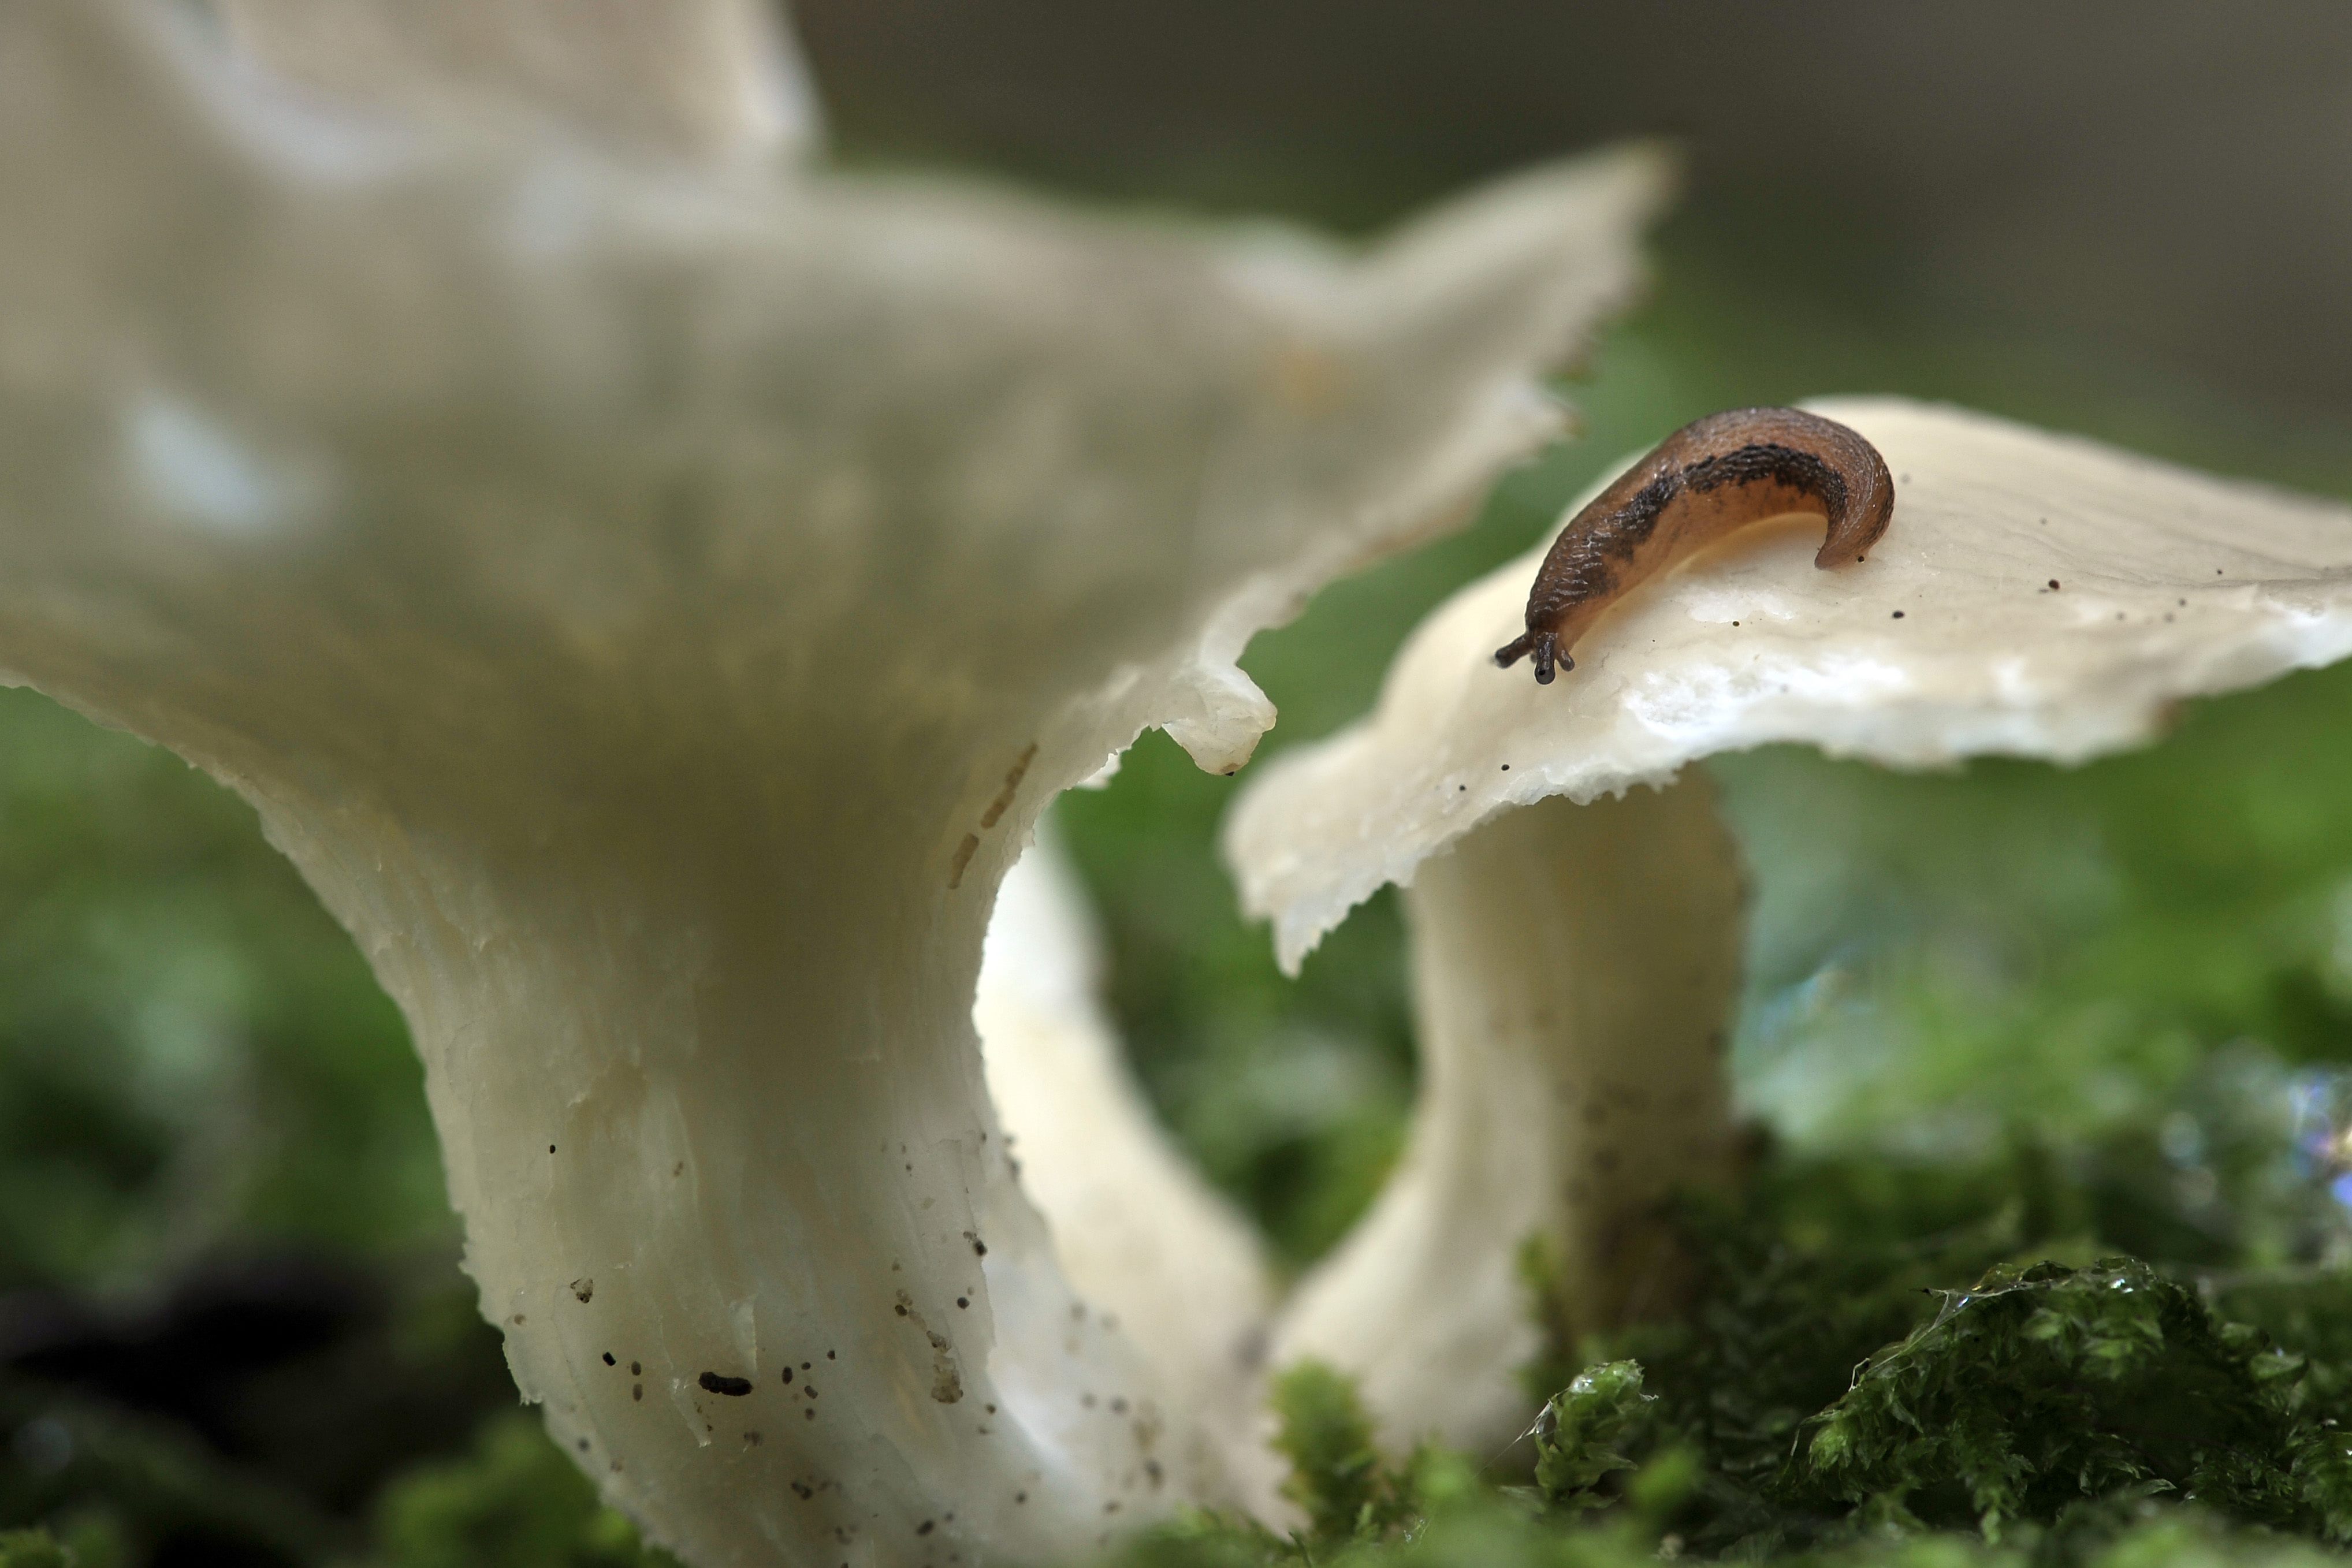 Fungi shelter myriad creatures, providing food and habitat.